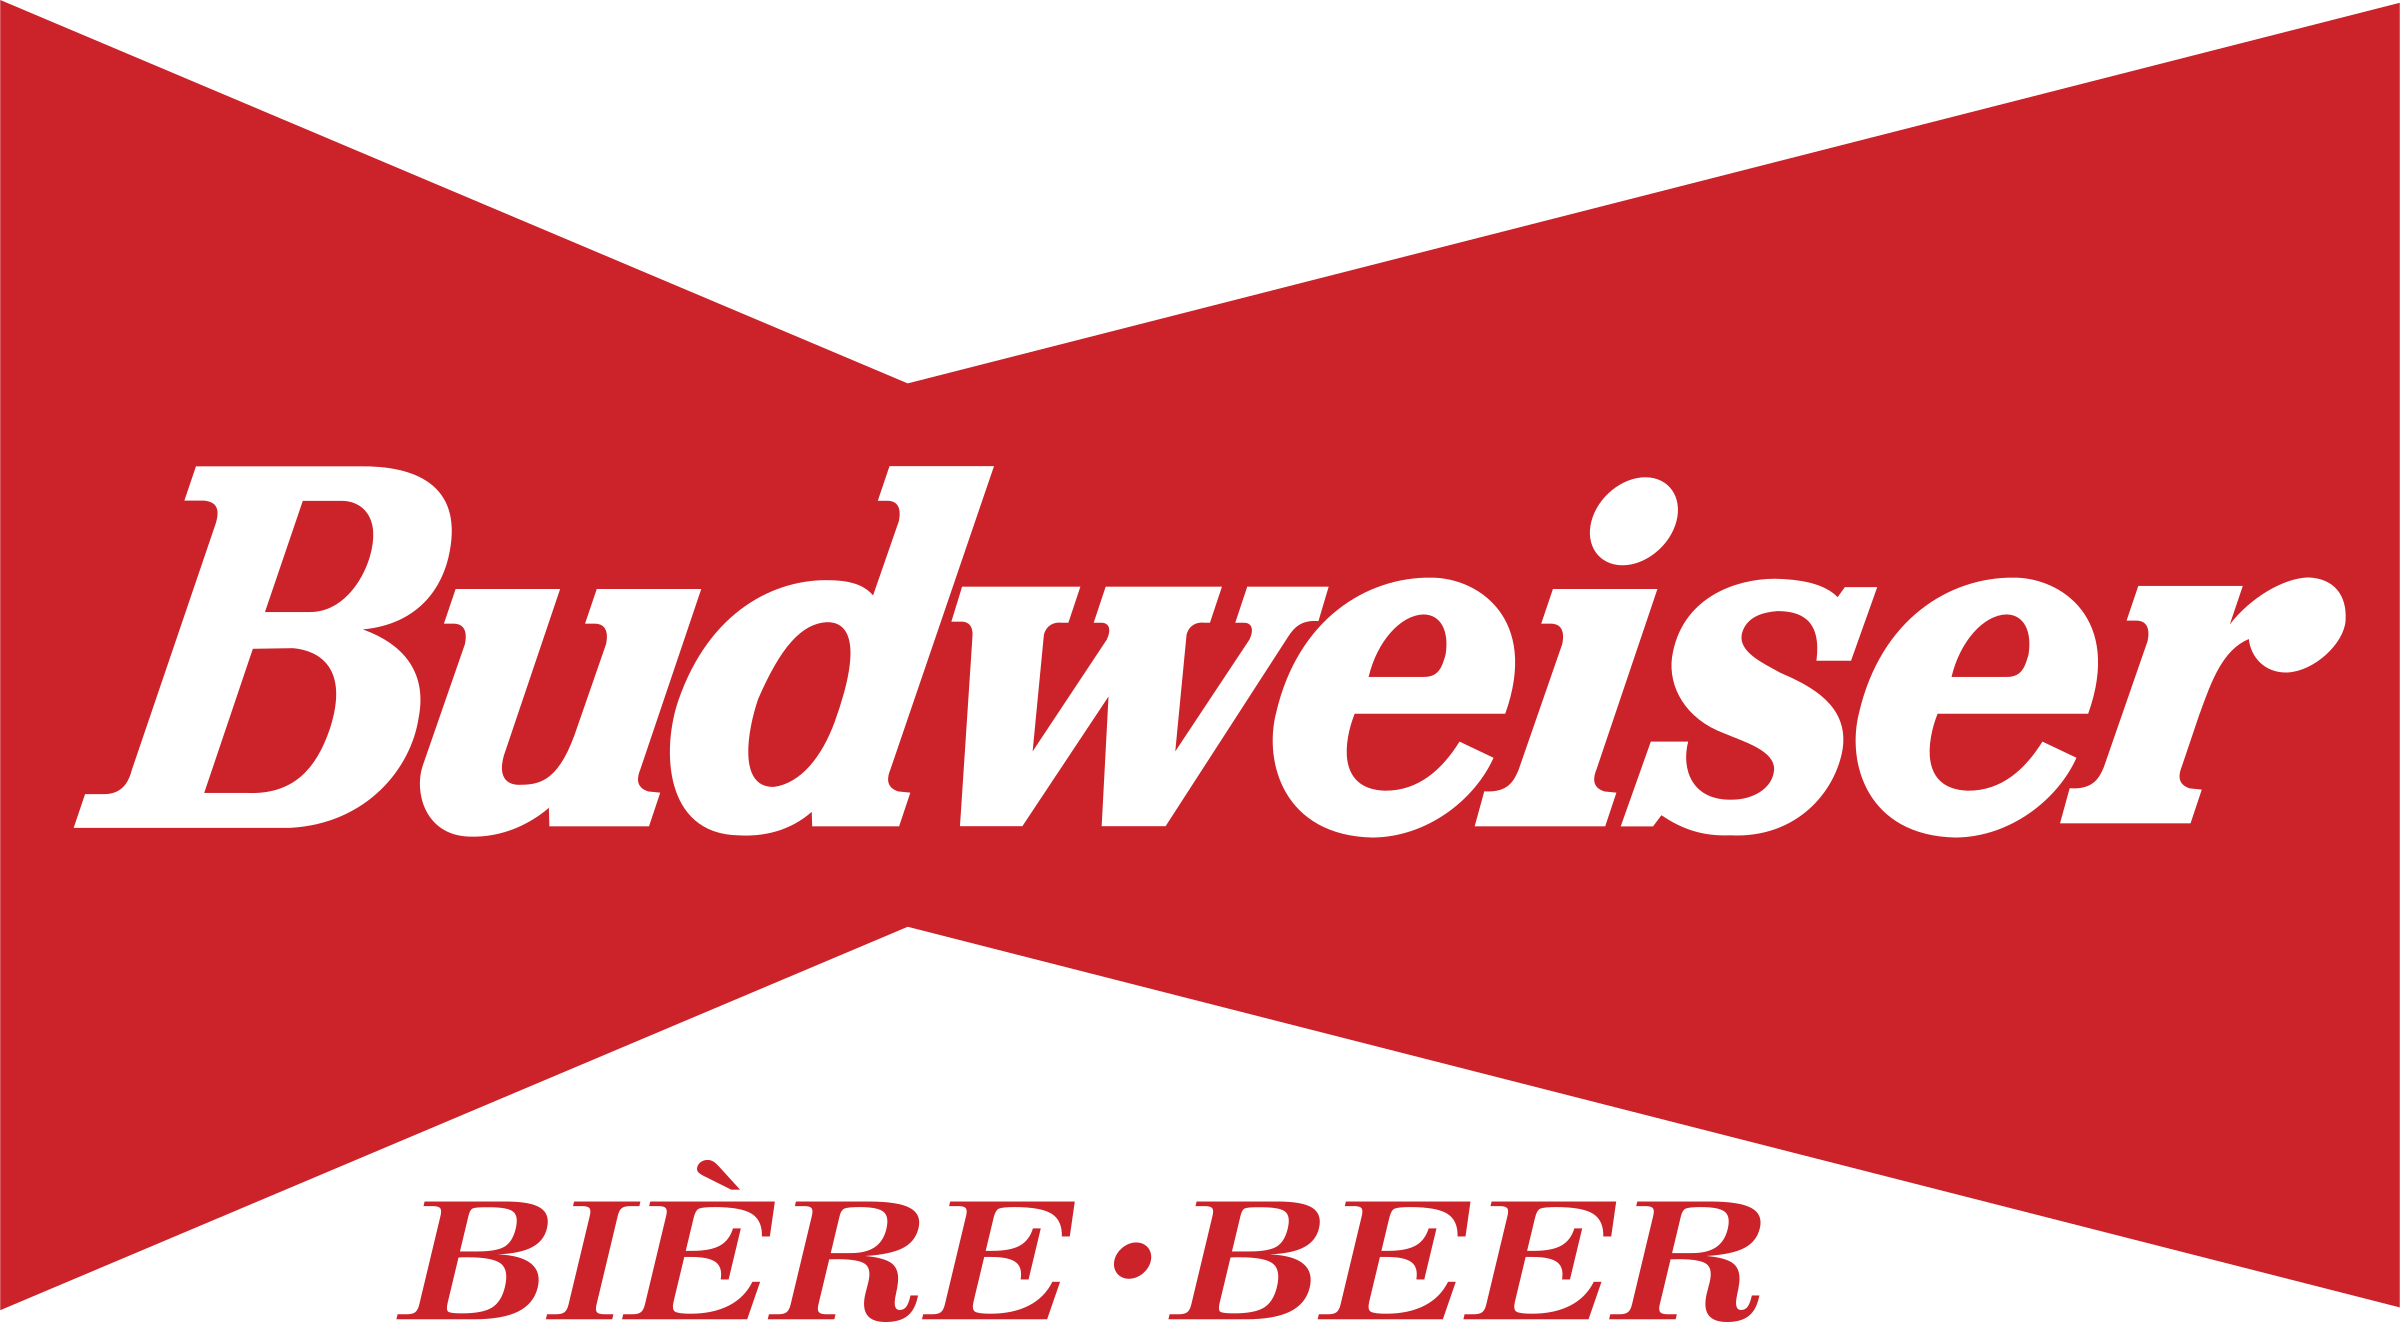 Budweiser Logo PNG Images